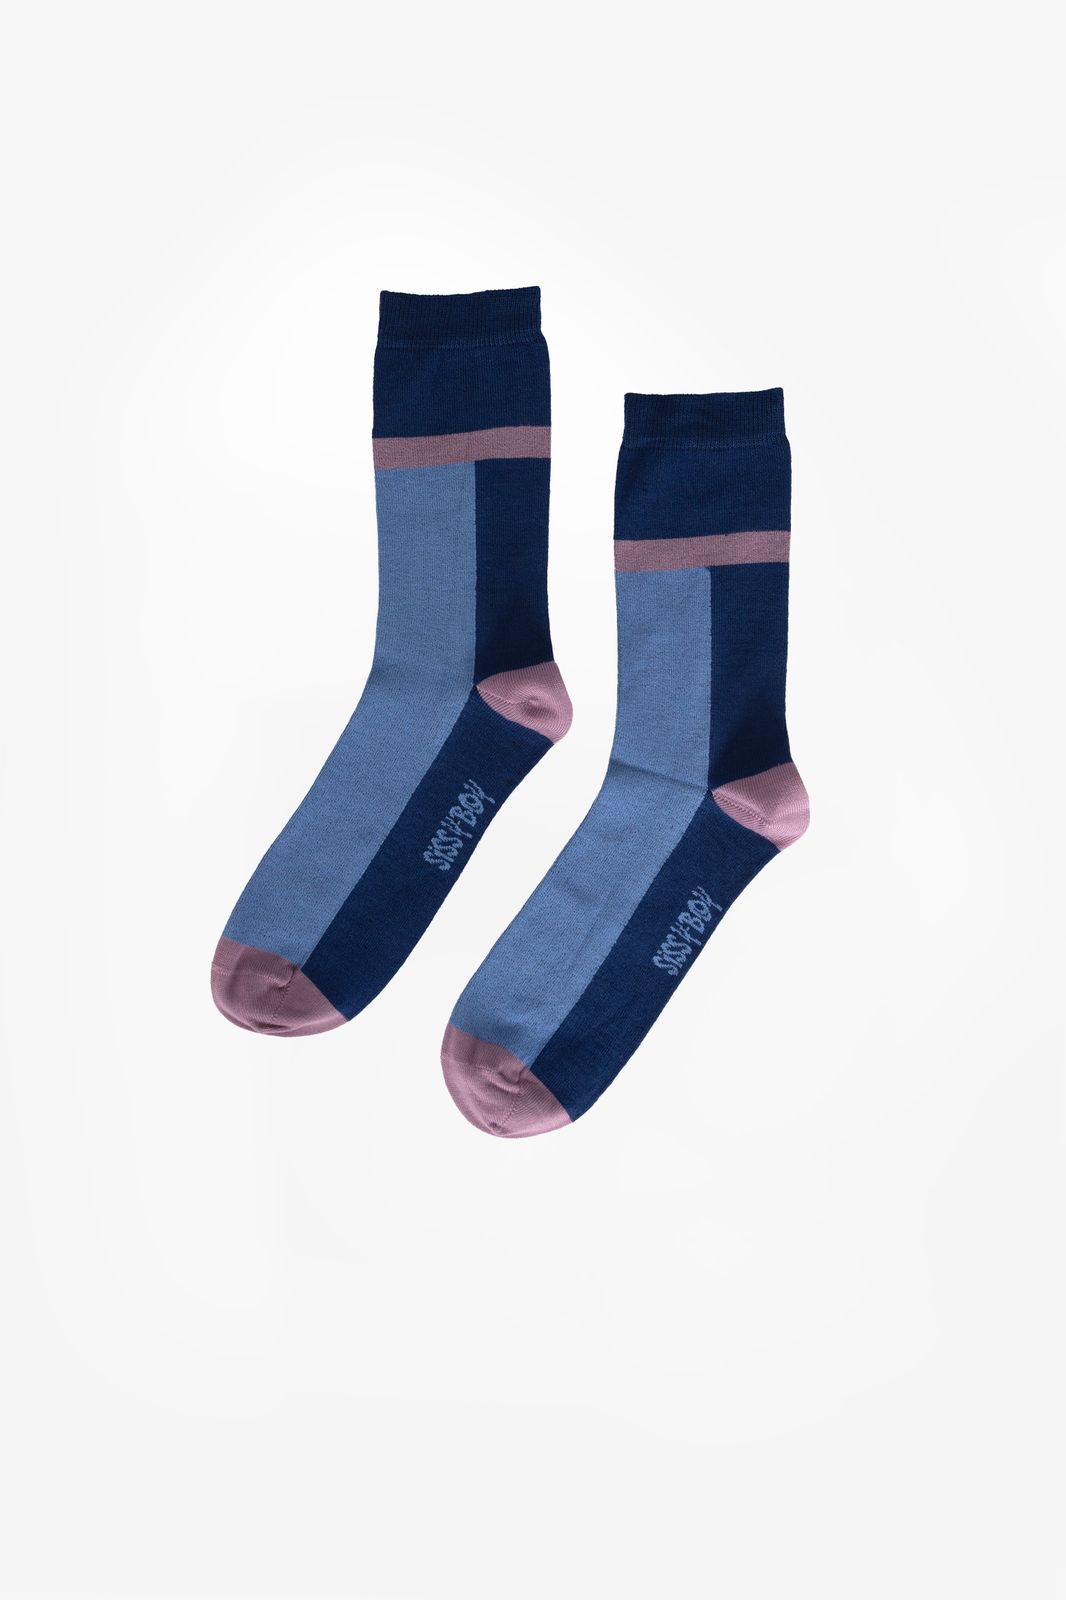 Socken in Colorblocking-Optik - dunkelblau